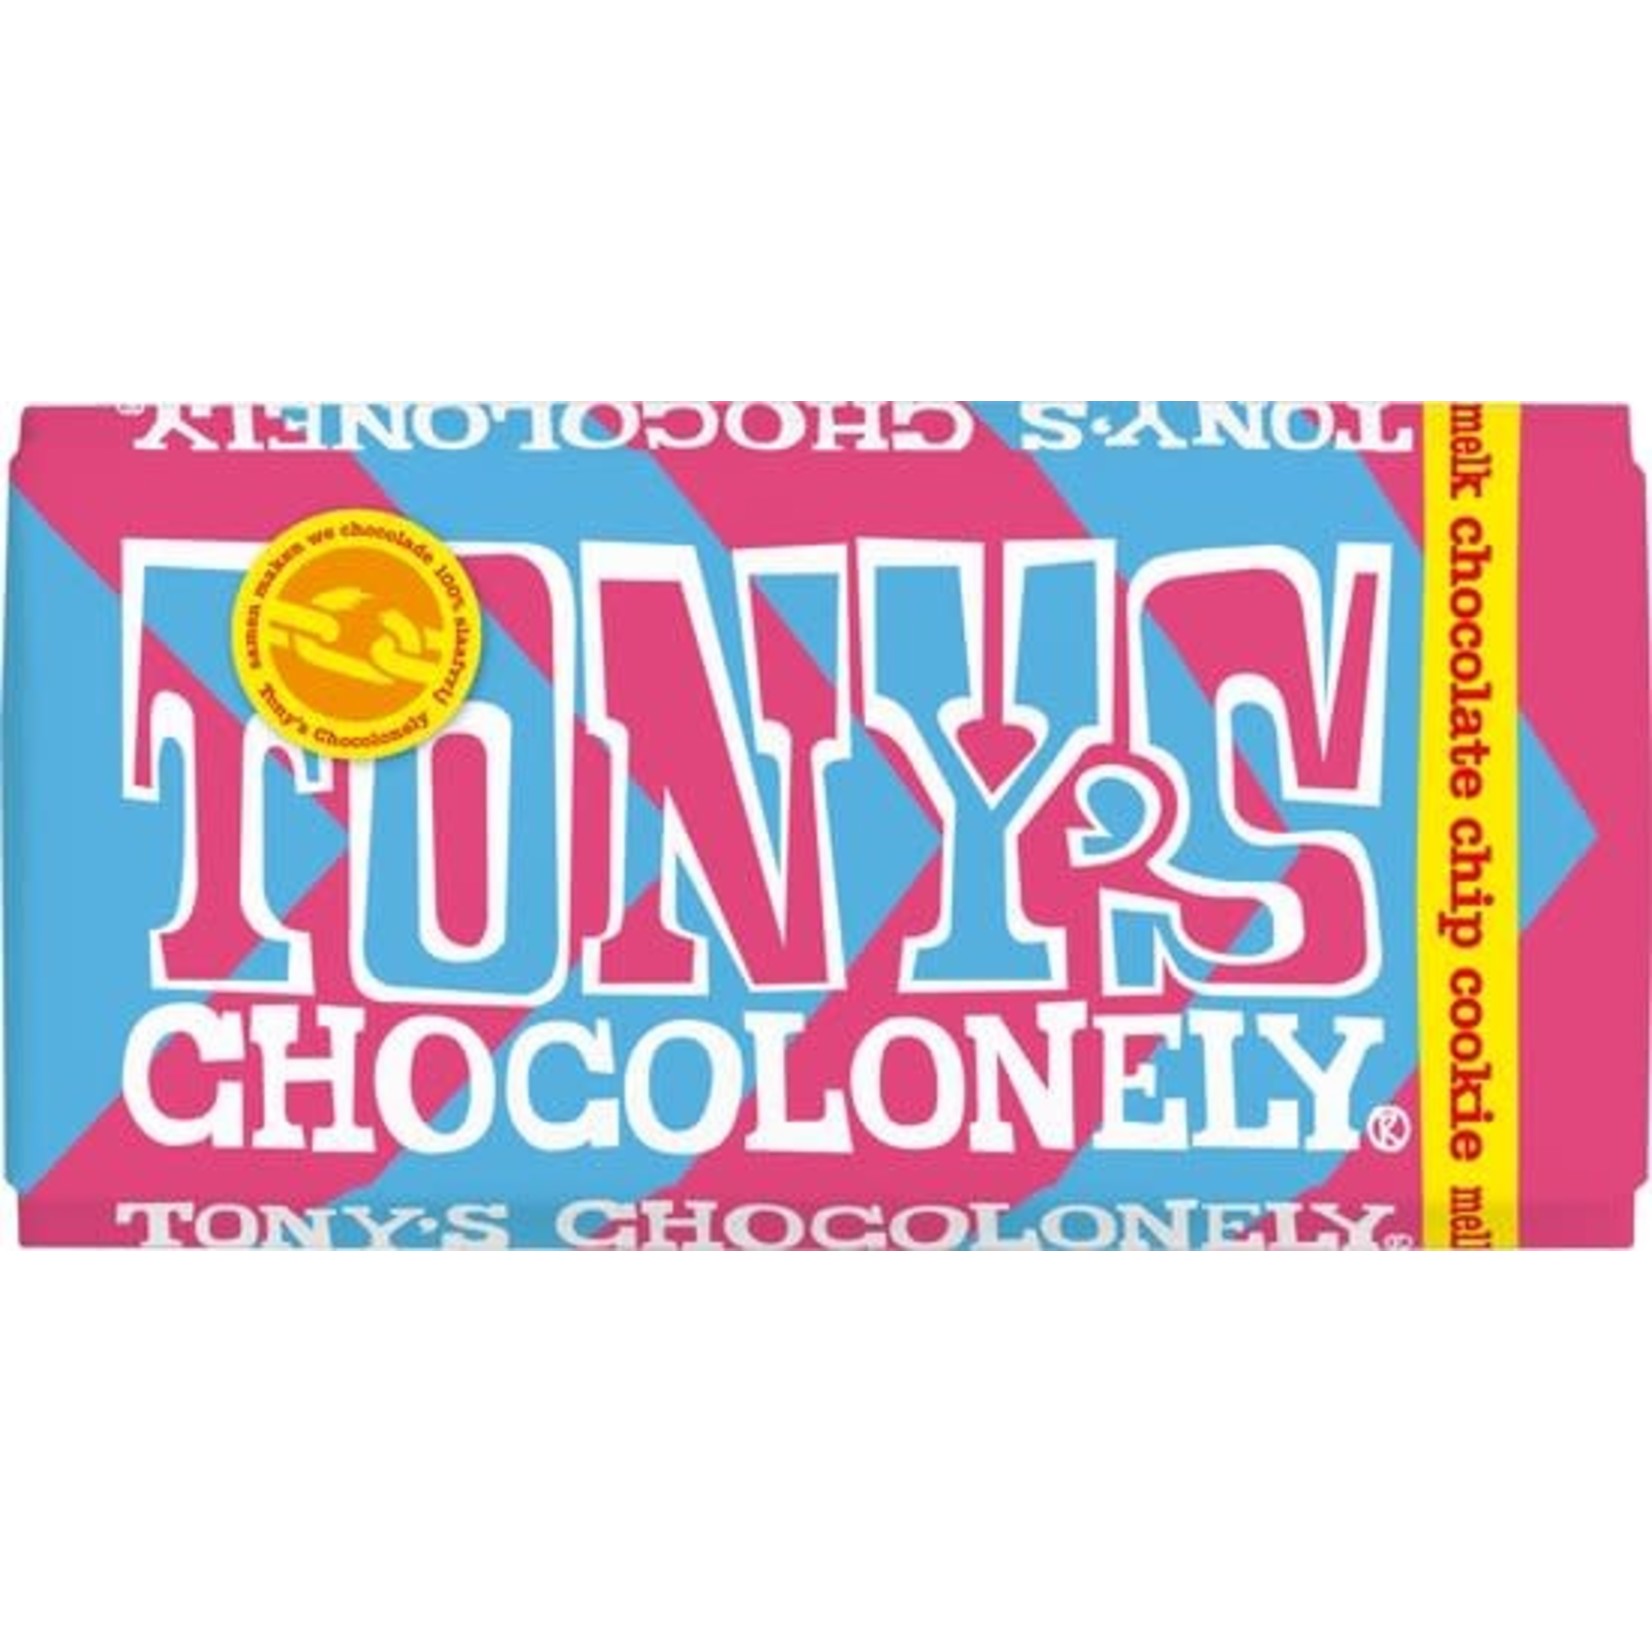 Tony's Chocolonely Tony's melk choco chip cookie 180g